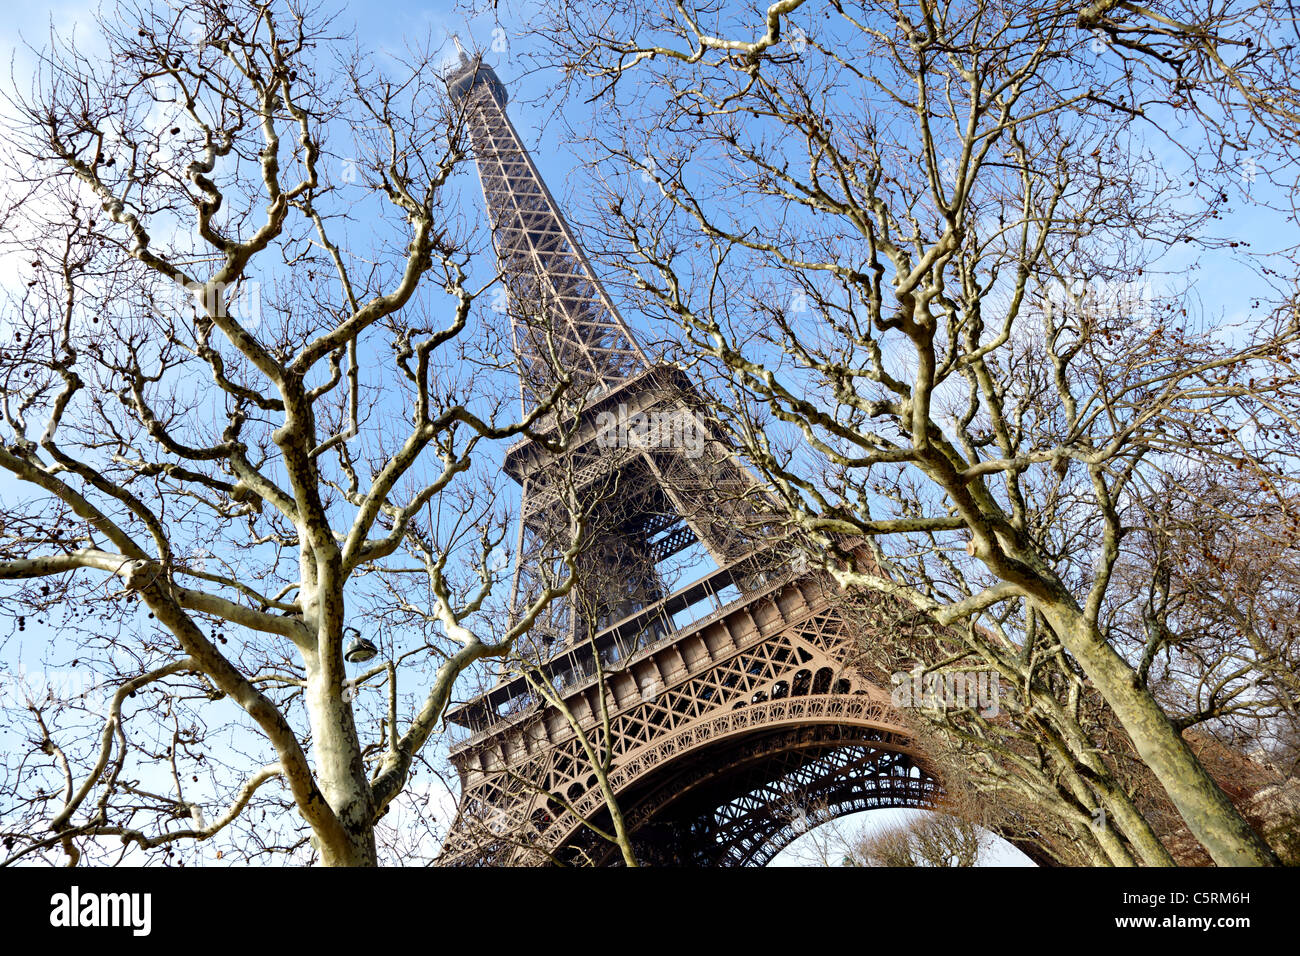 Eiffel Tower, Paris Stock Photo